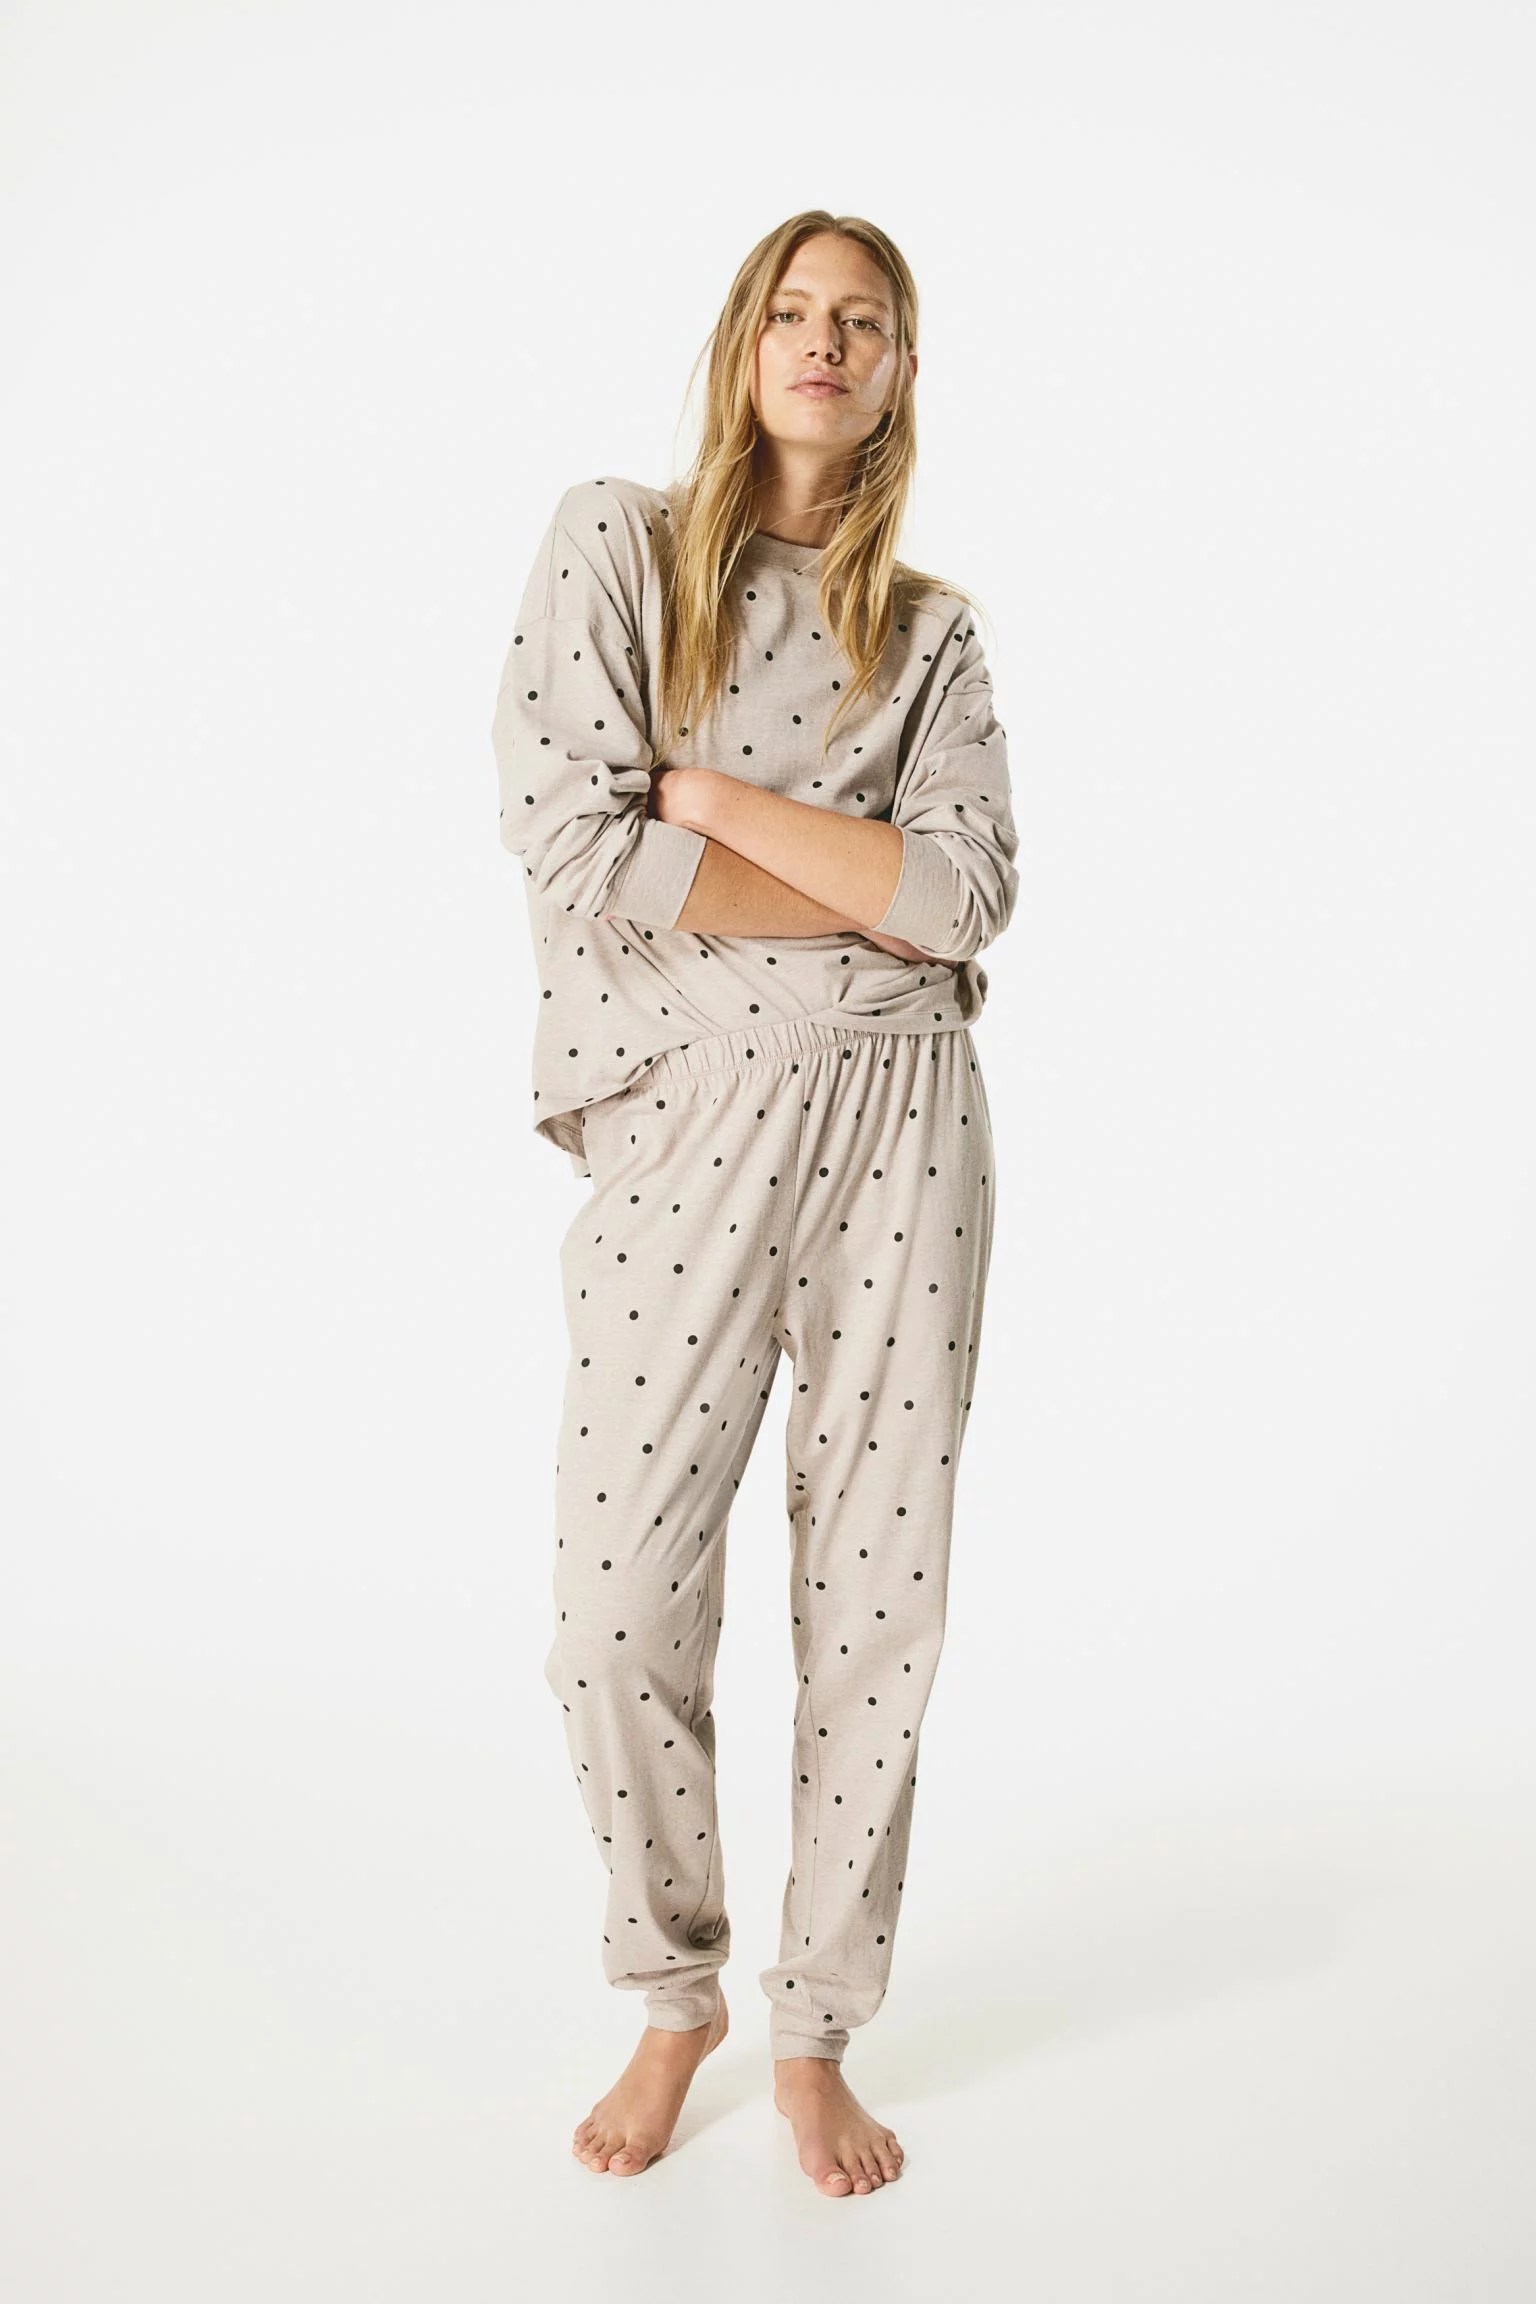 H&M Patterned Jersey Pajamas